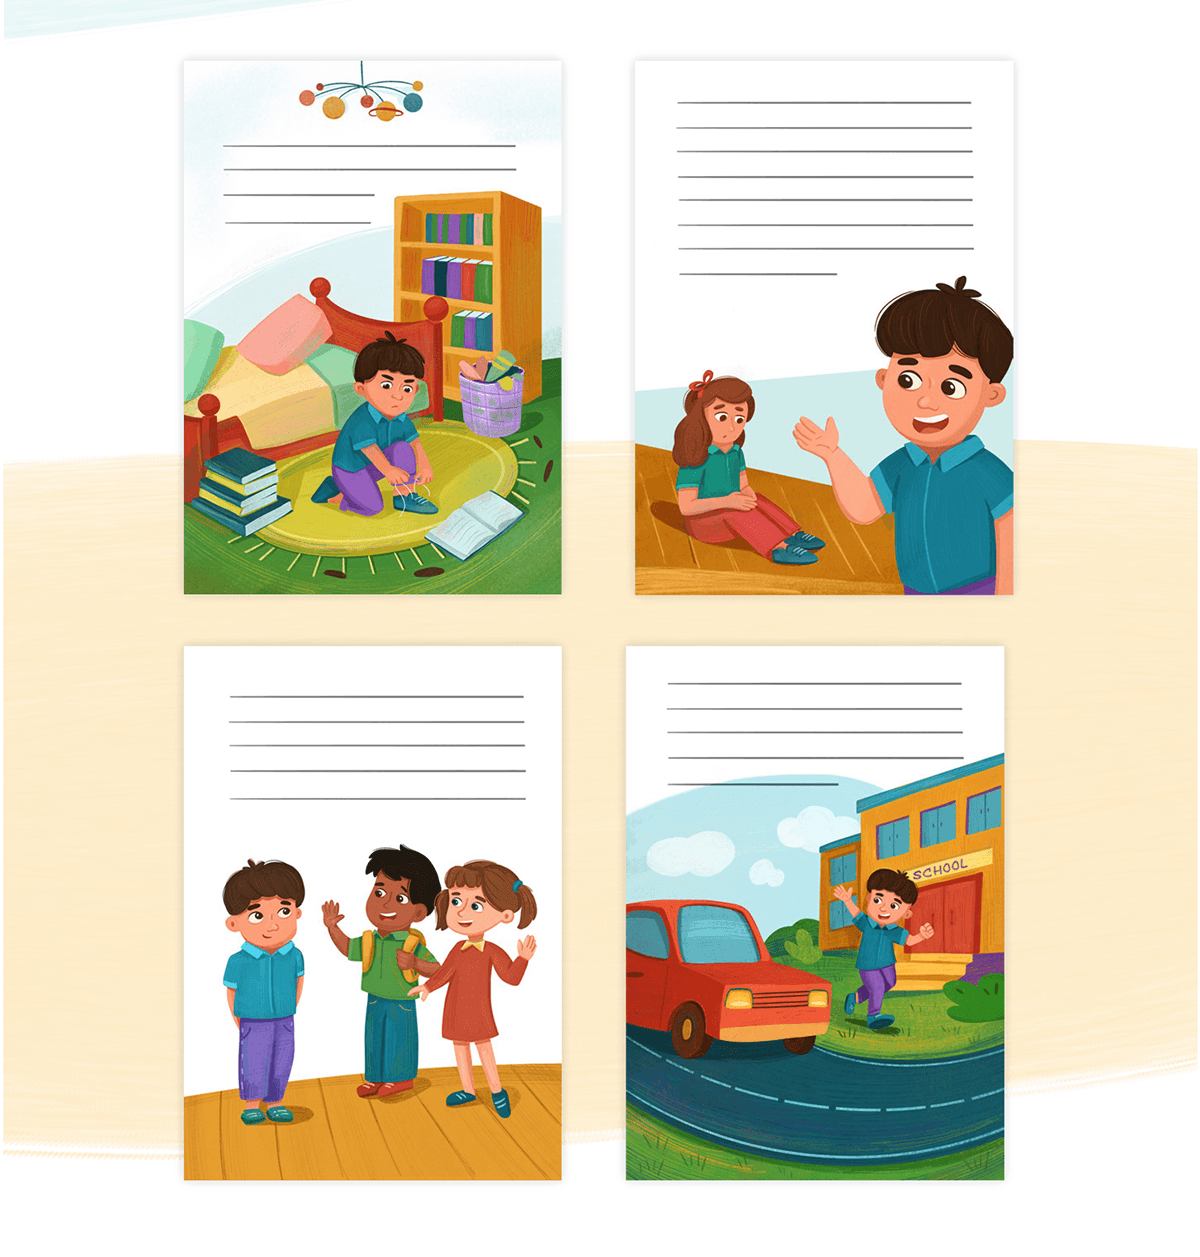 Character design  children's book children illustration lettering cute illustration Digital Art  school publishing   book design books